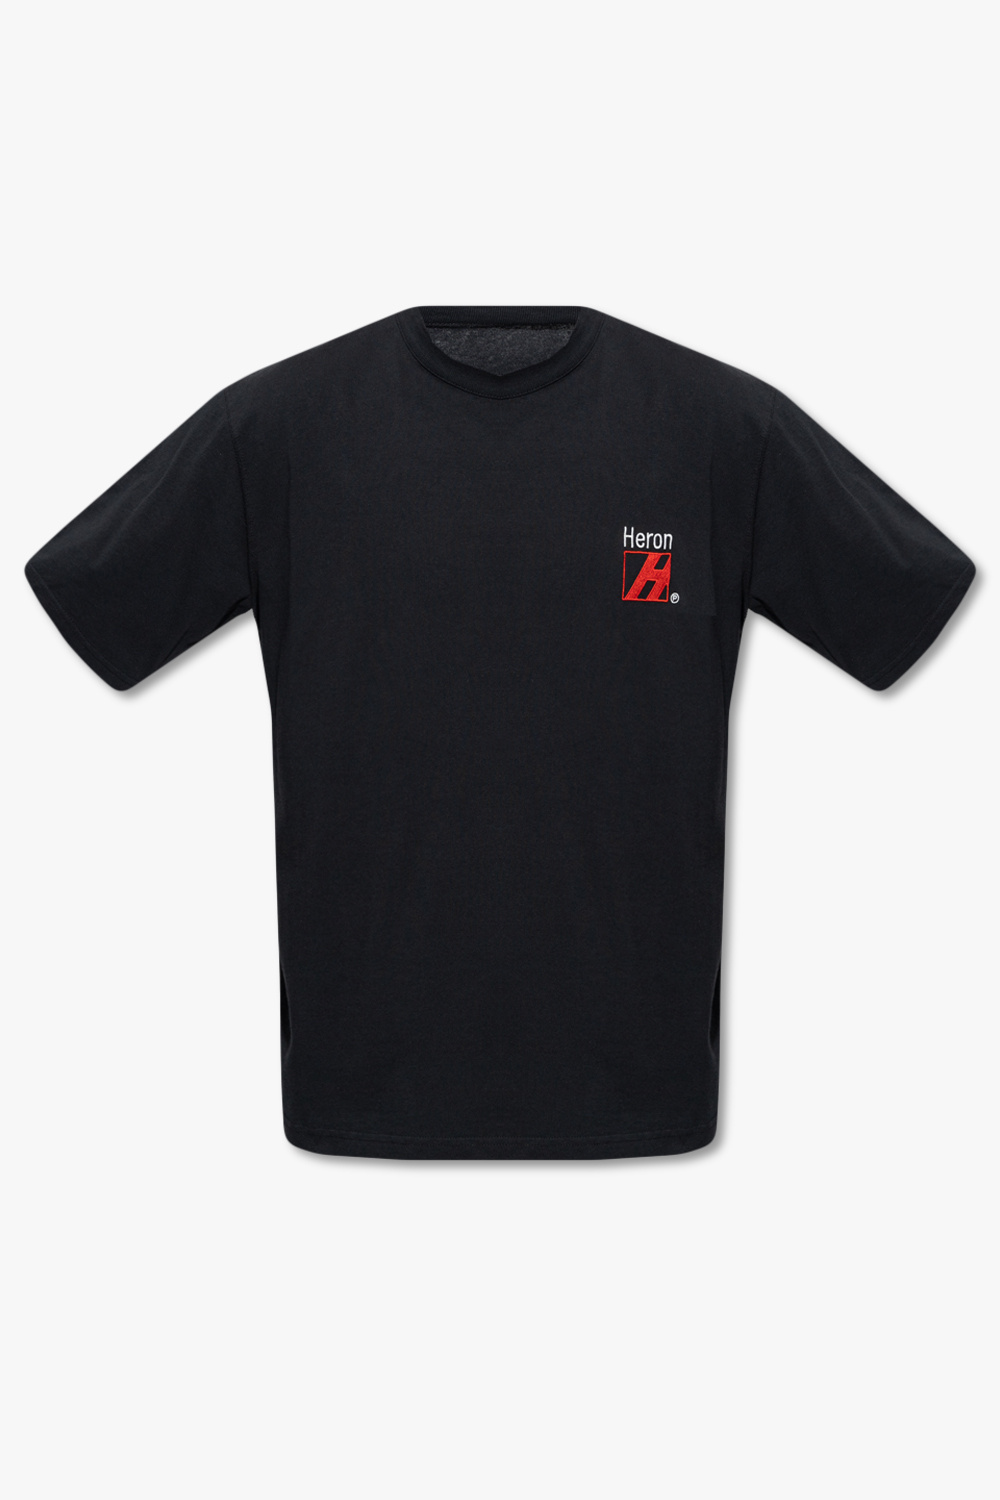 Heron Preston T-shirt with logo | Men's Clothing | Vitkac